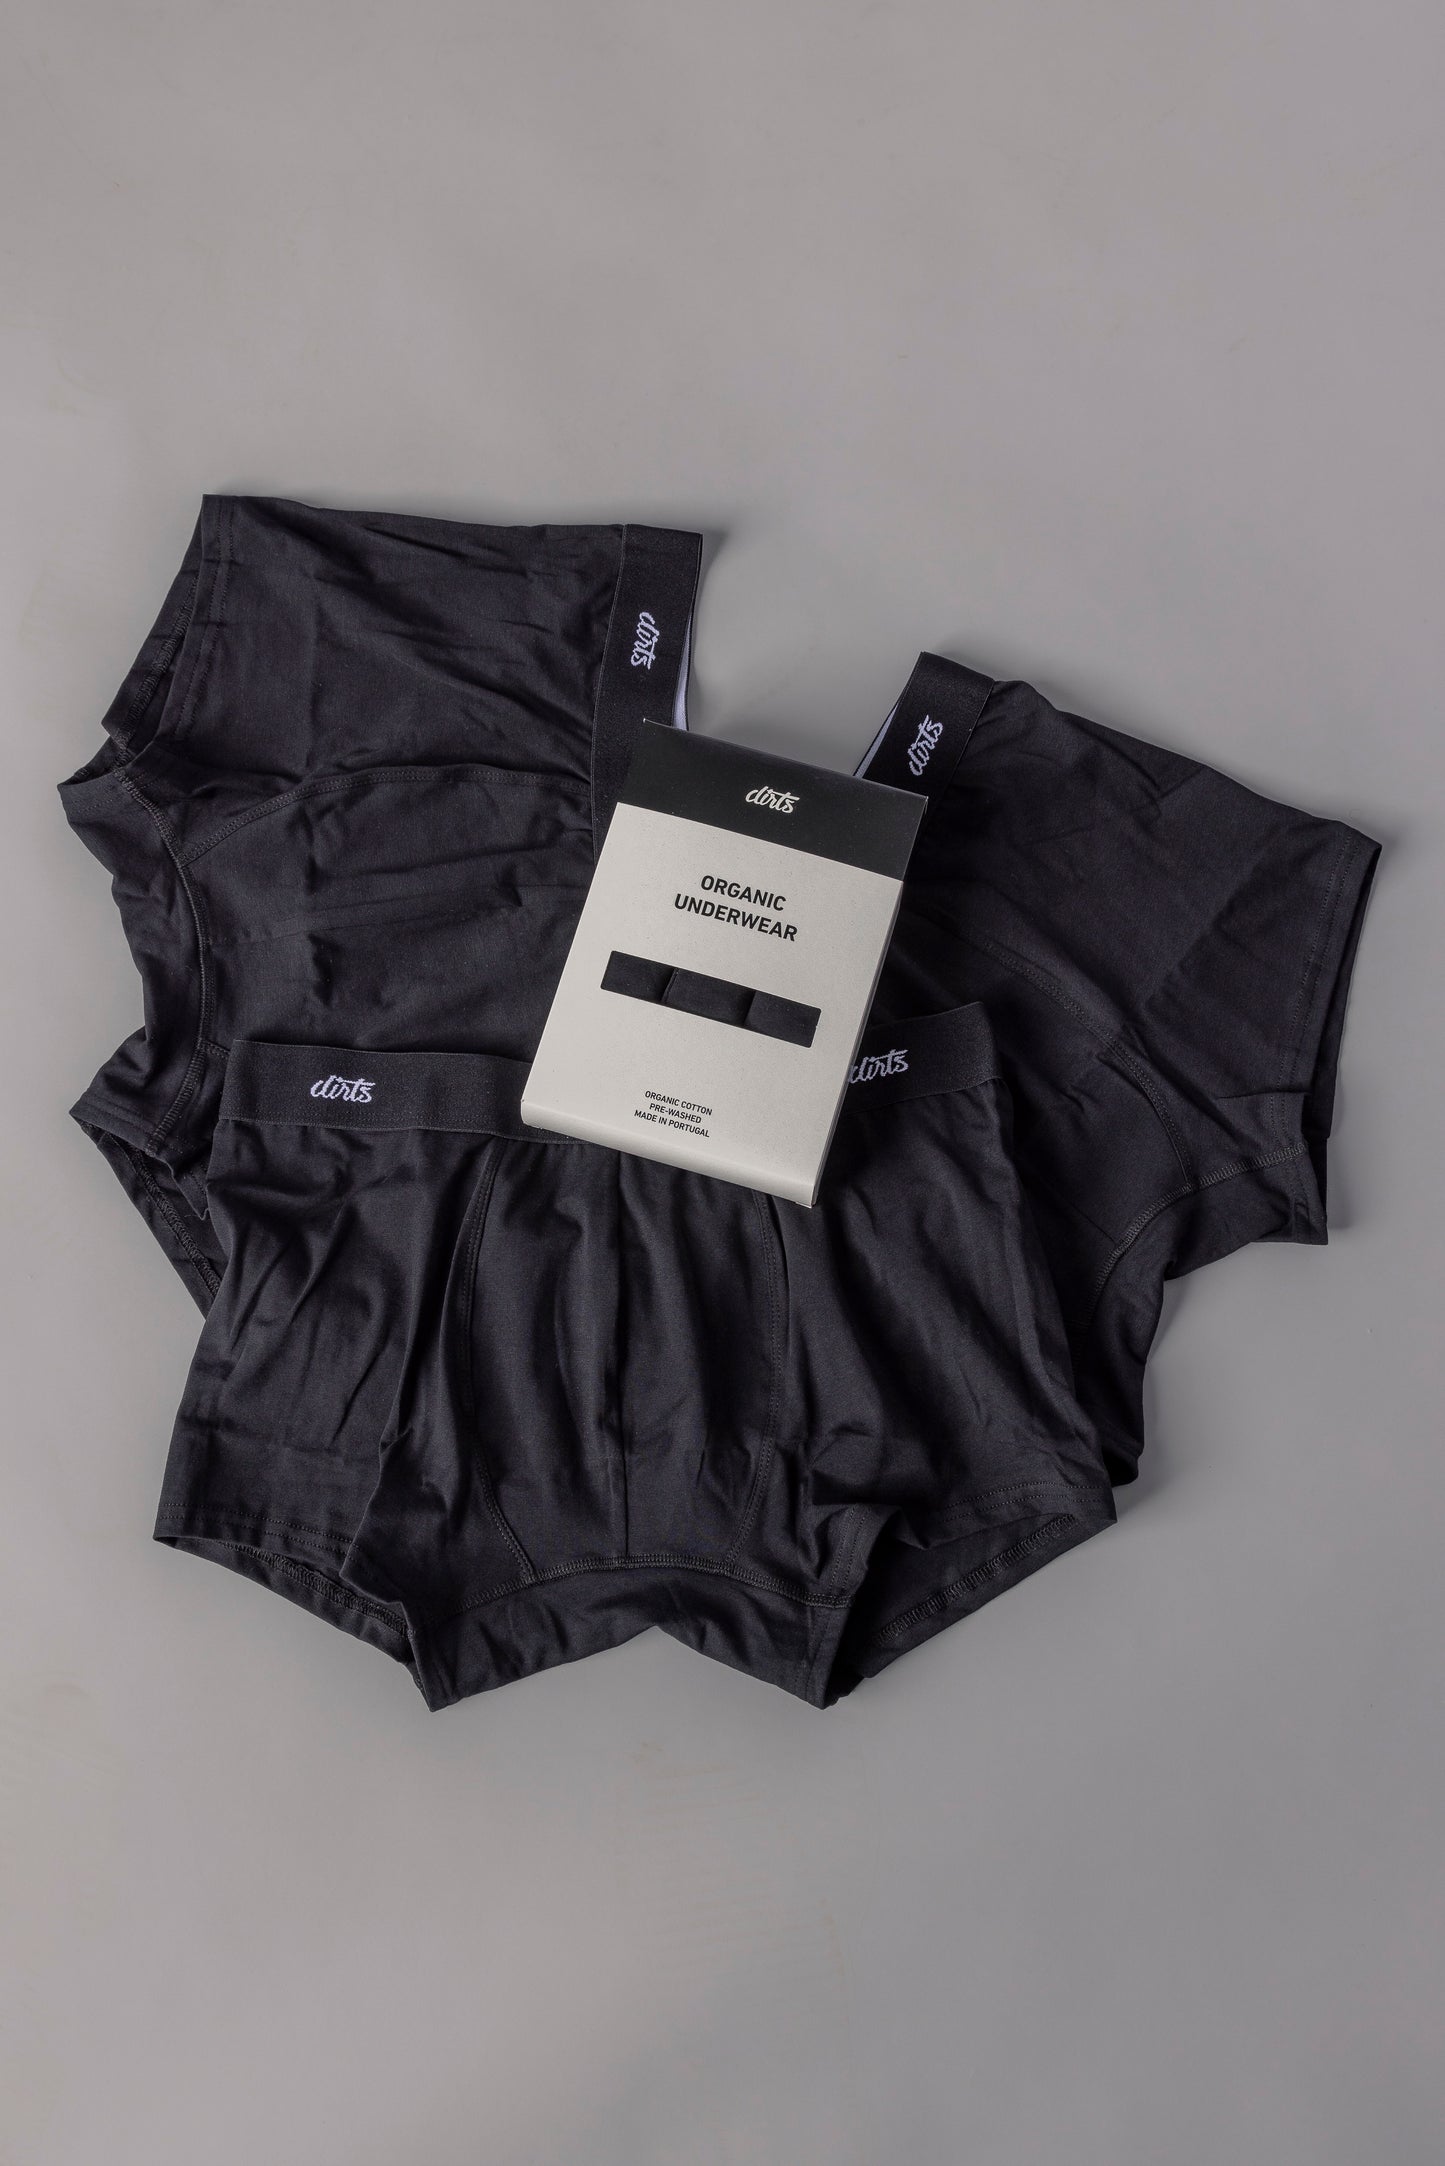 Pack of 3 boxer shorts, black